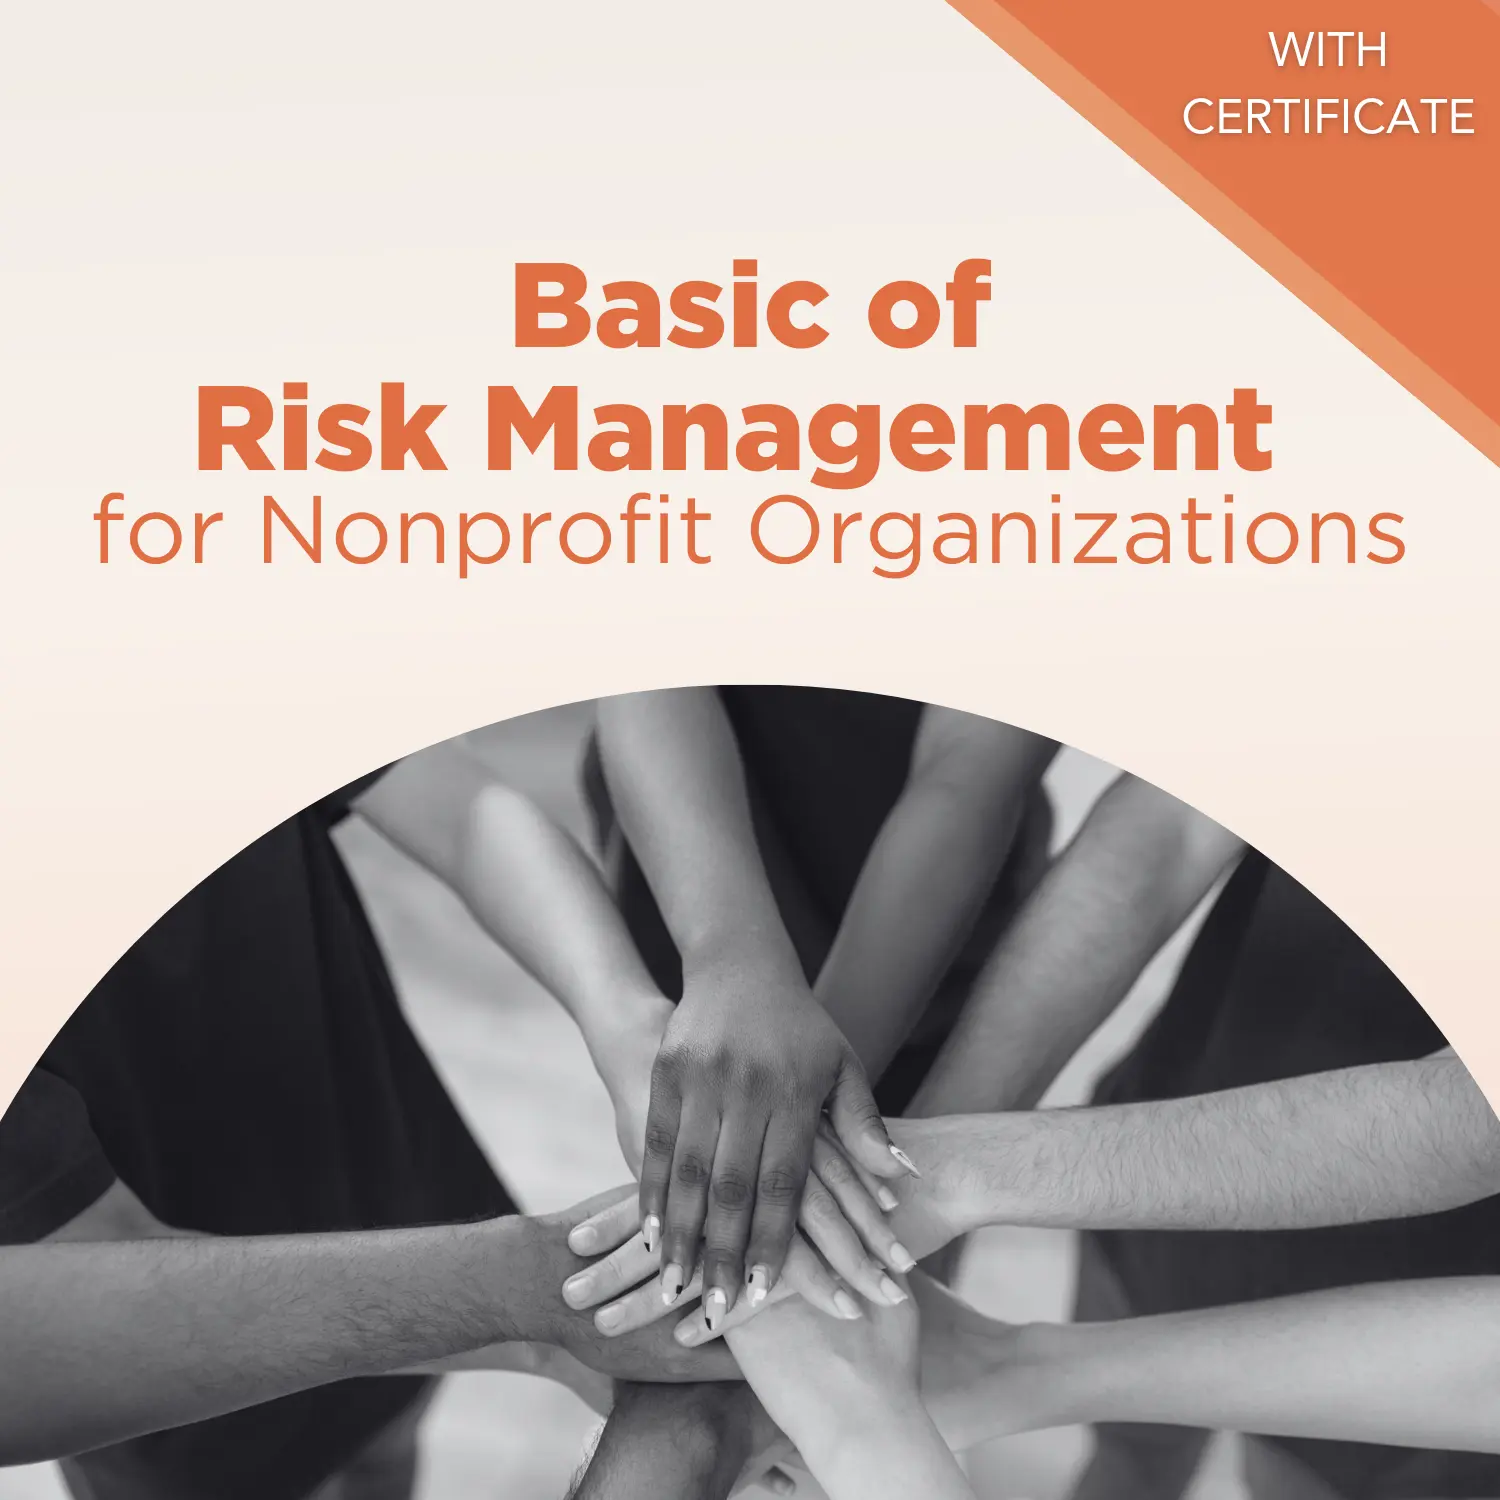 Basic of Risk Management for Nonprofit Organizations